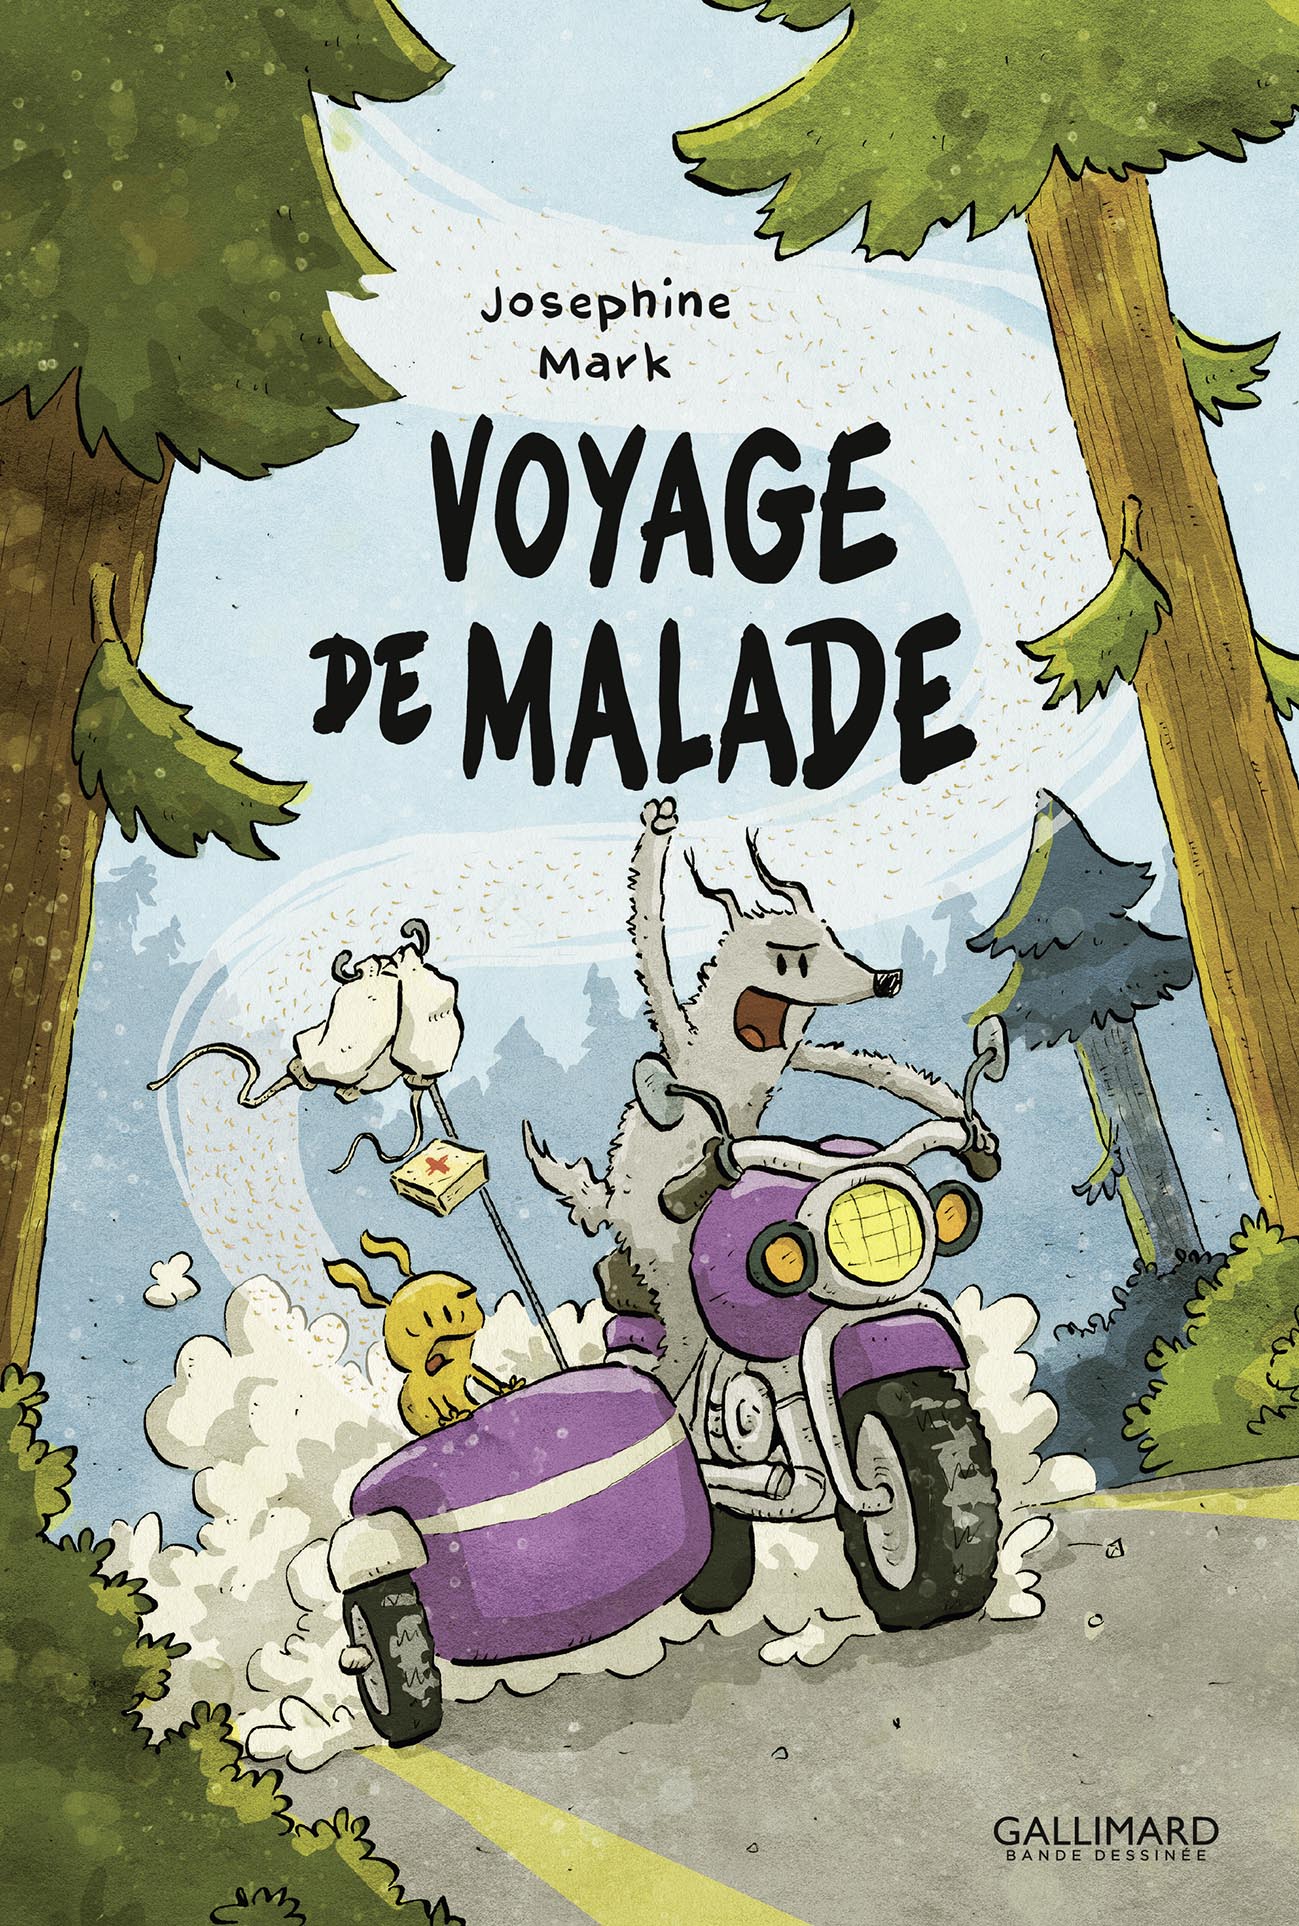 Josephine Mark: Voyage de malade (GraphicNovel, Français language, Gallimard)